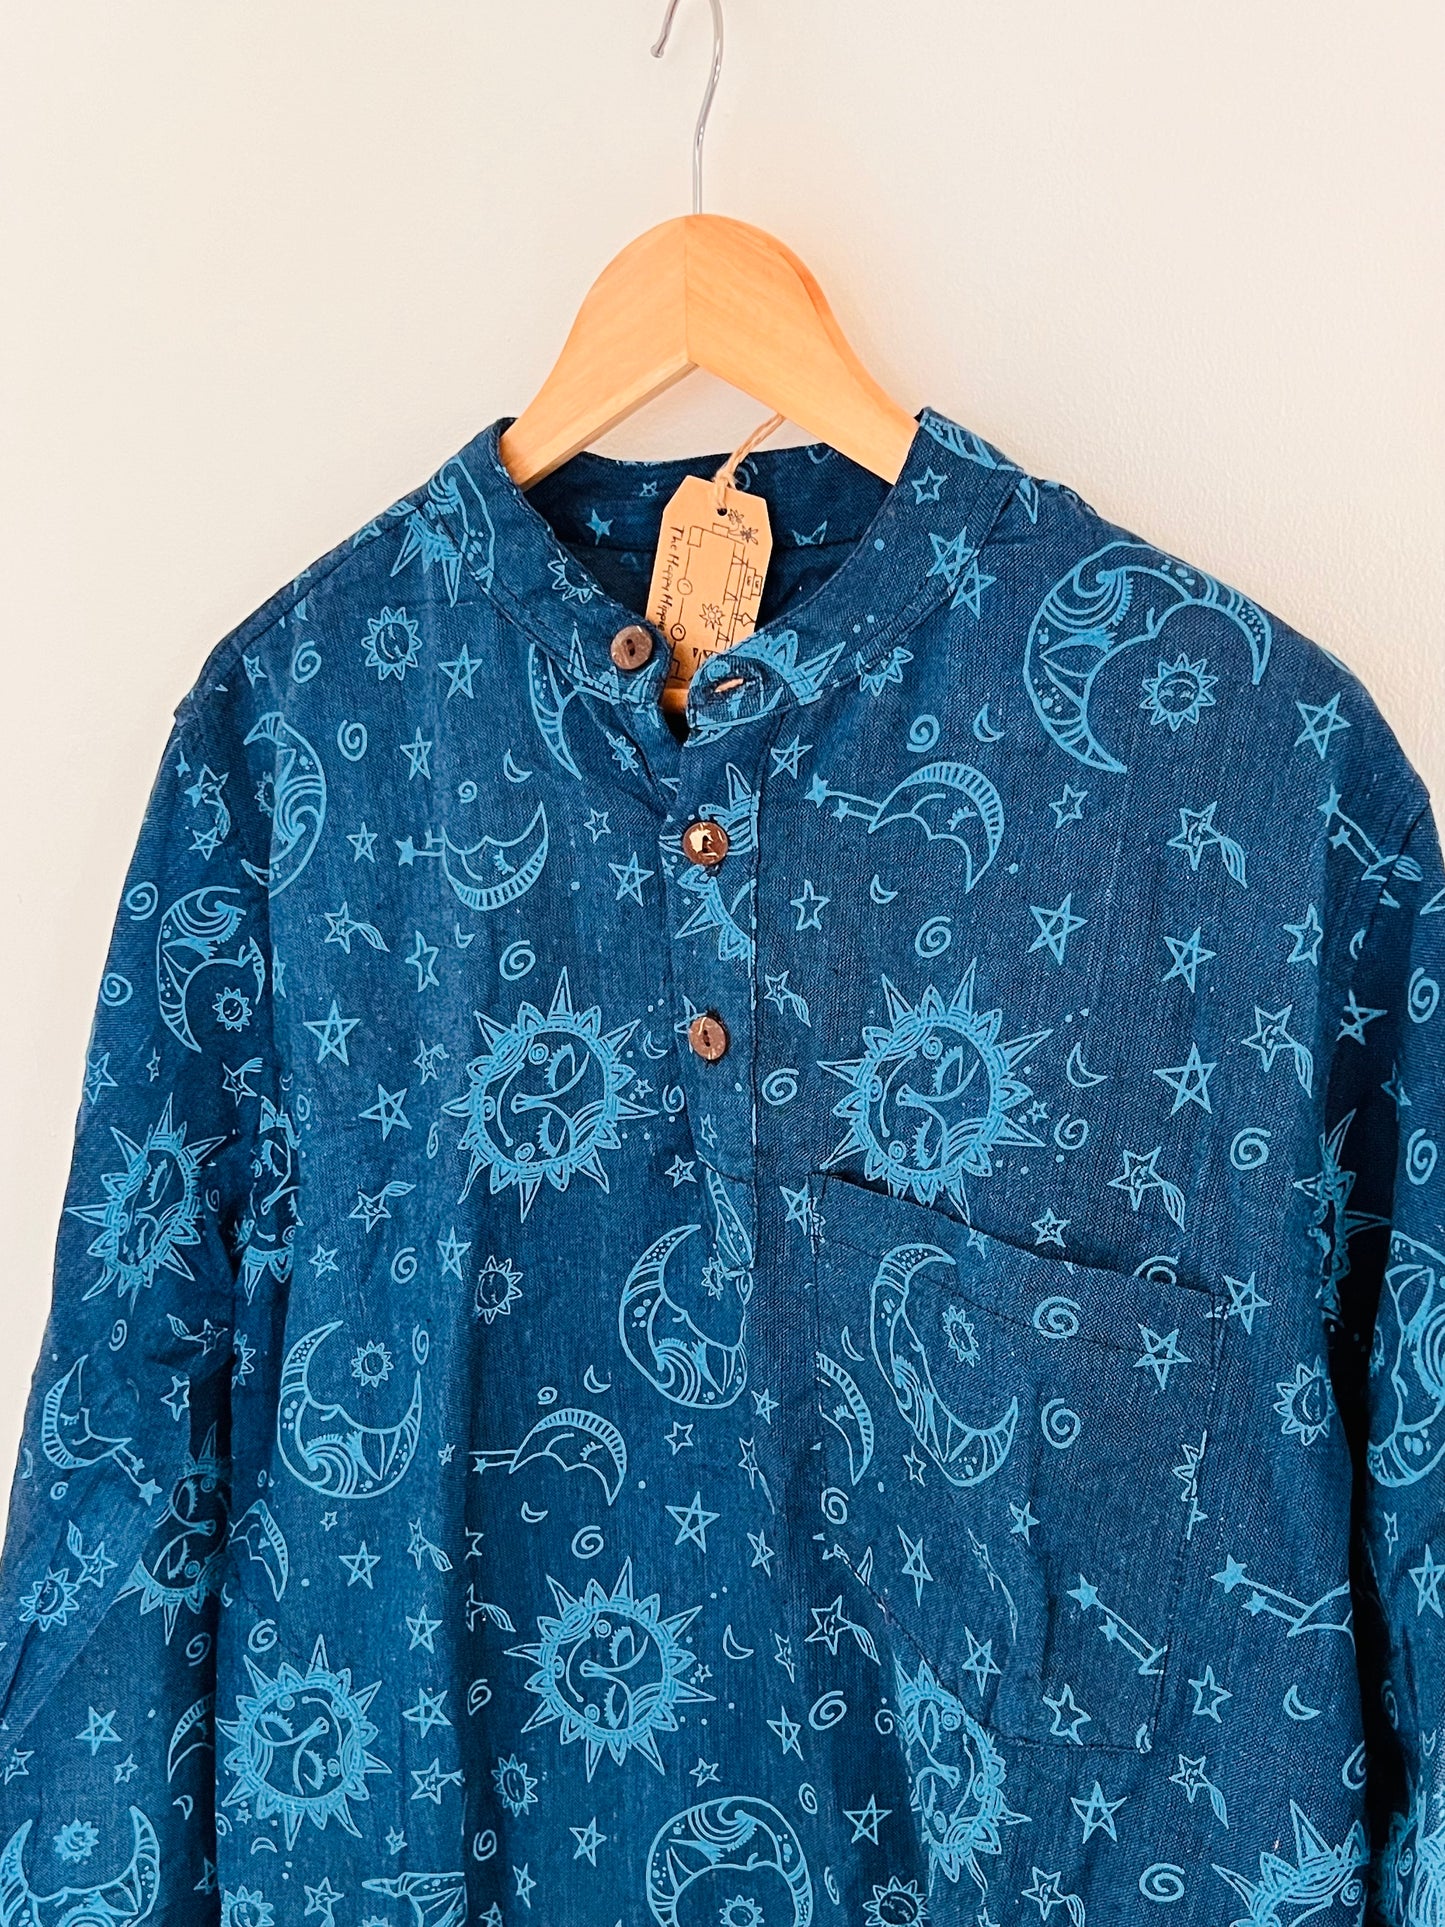 Blue moon sun celestial grandad collar button shirt Handmade fair trade ethically sourced ethical clothing long sleeve cotton shirt 